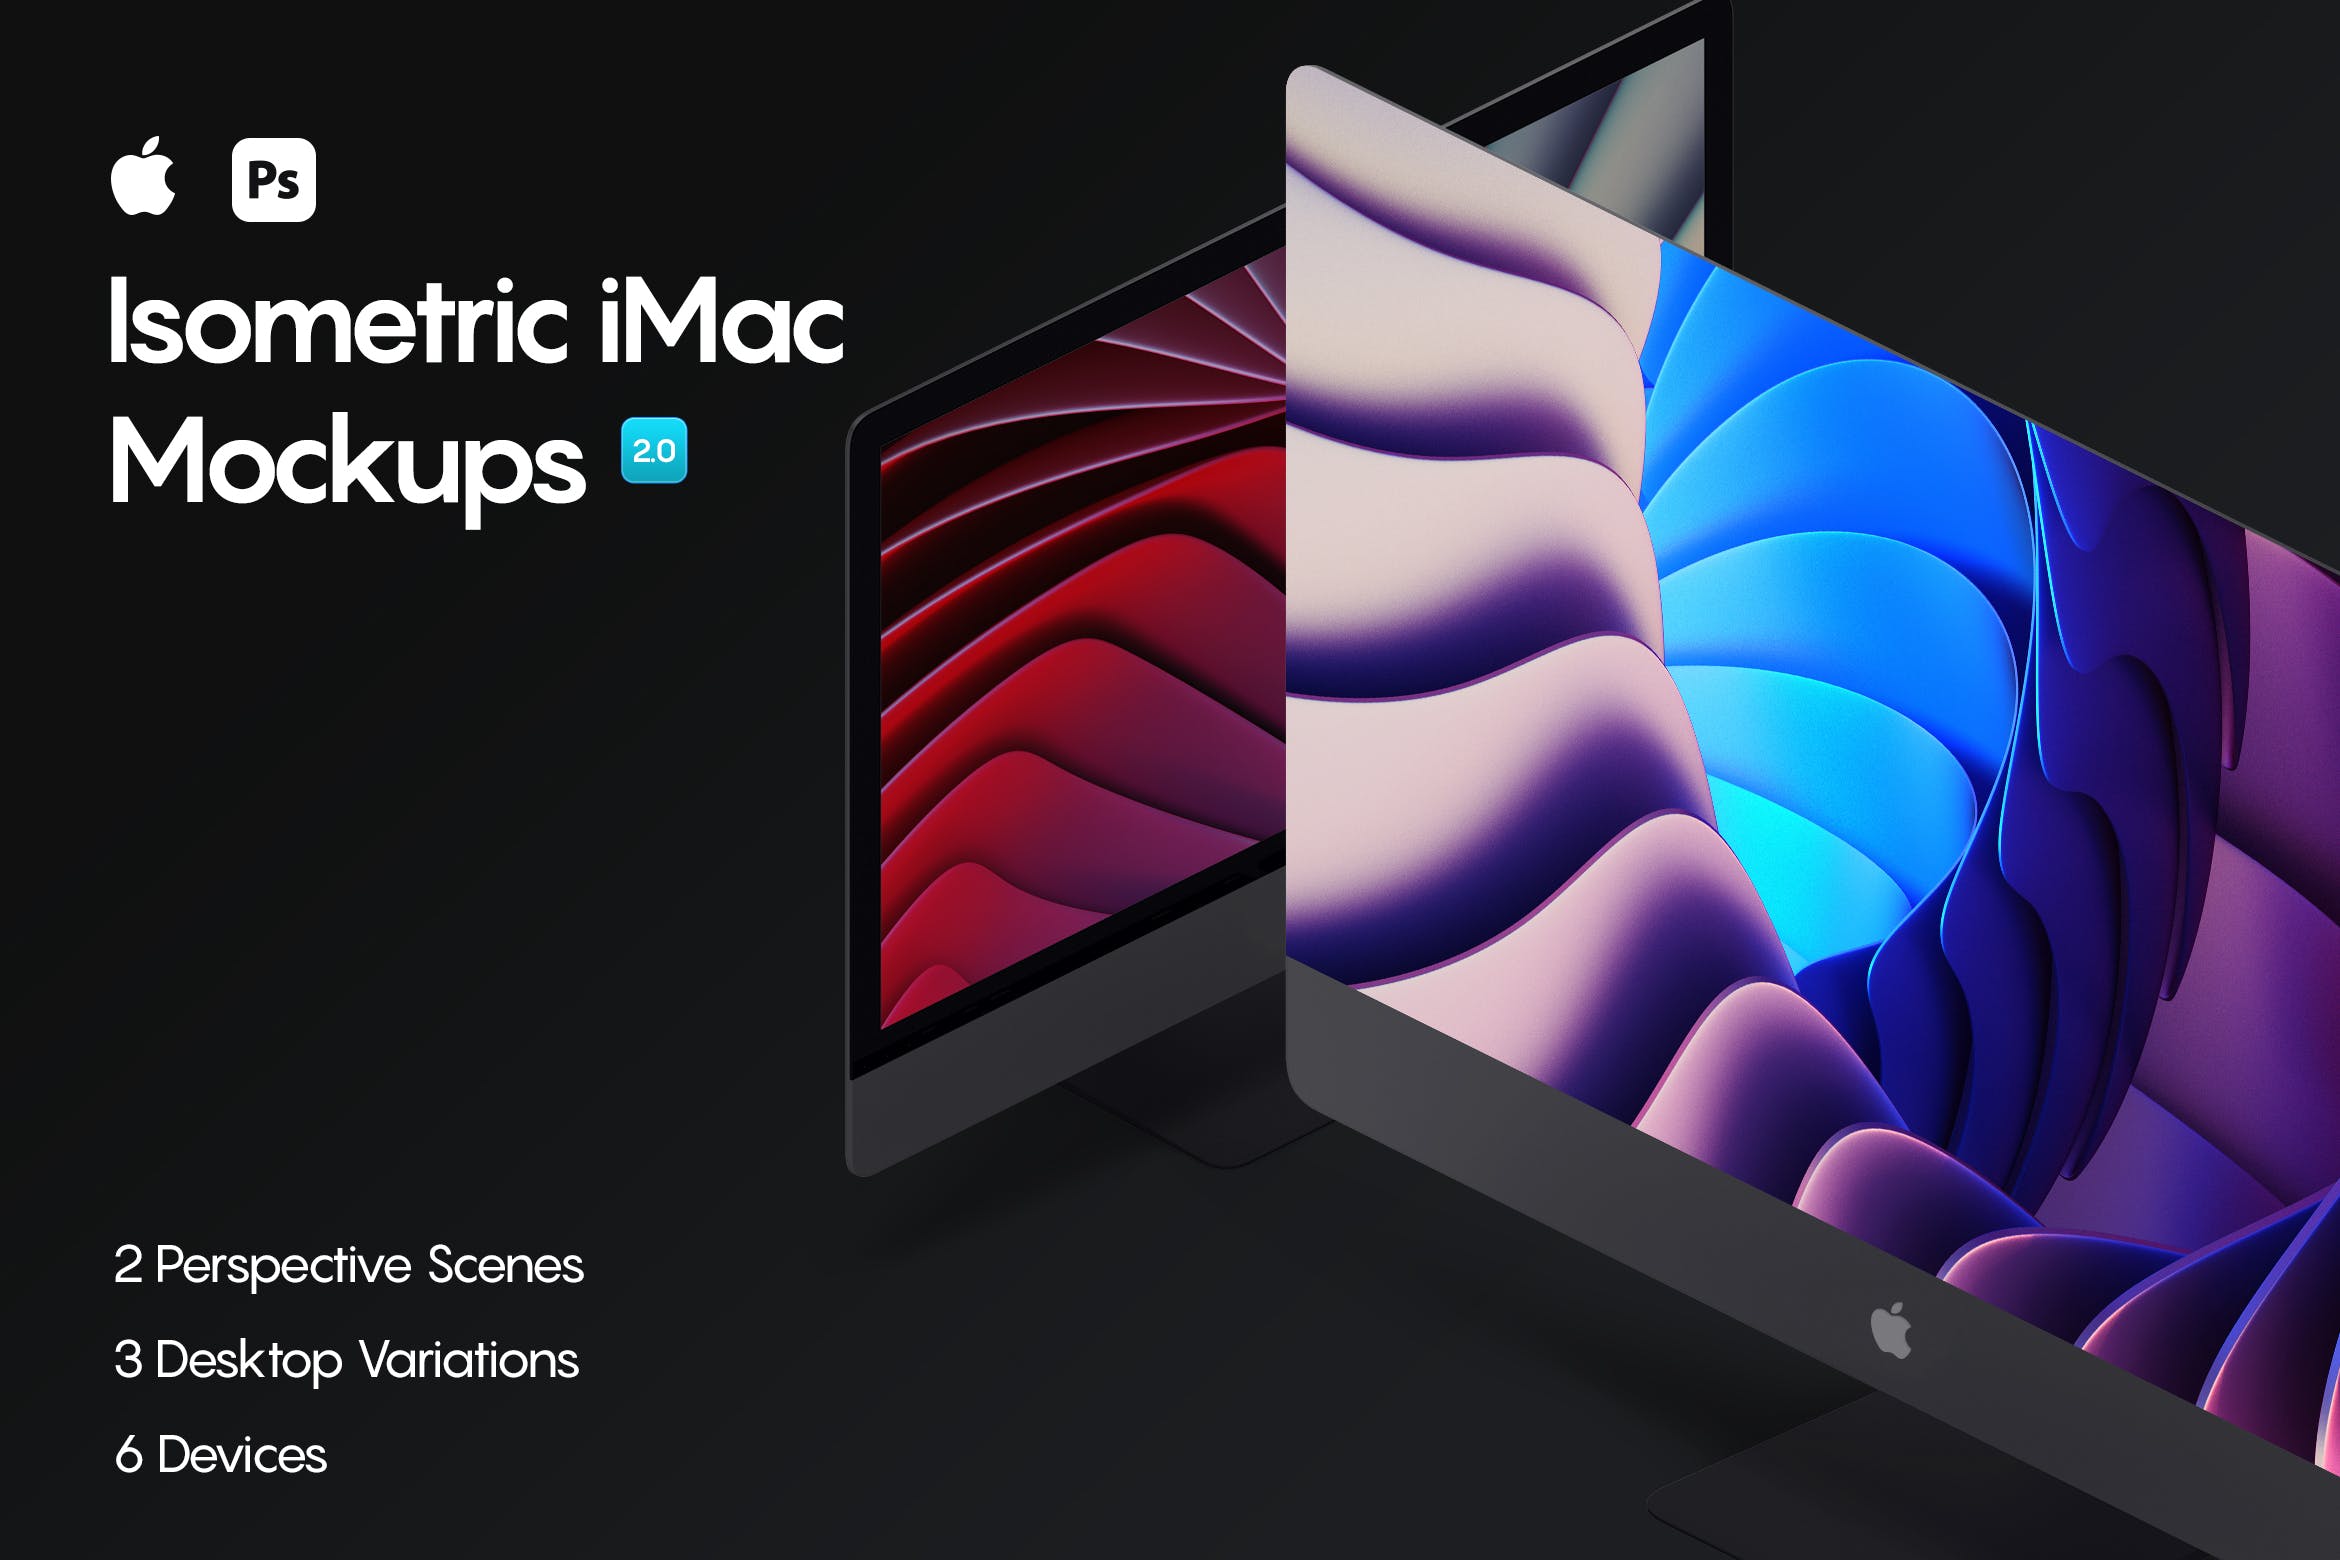 iMac一体机网站UI设计效果图预览样机素材v2 Isometric iMac Mockup 2.0插图